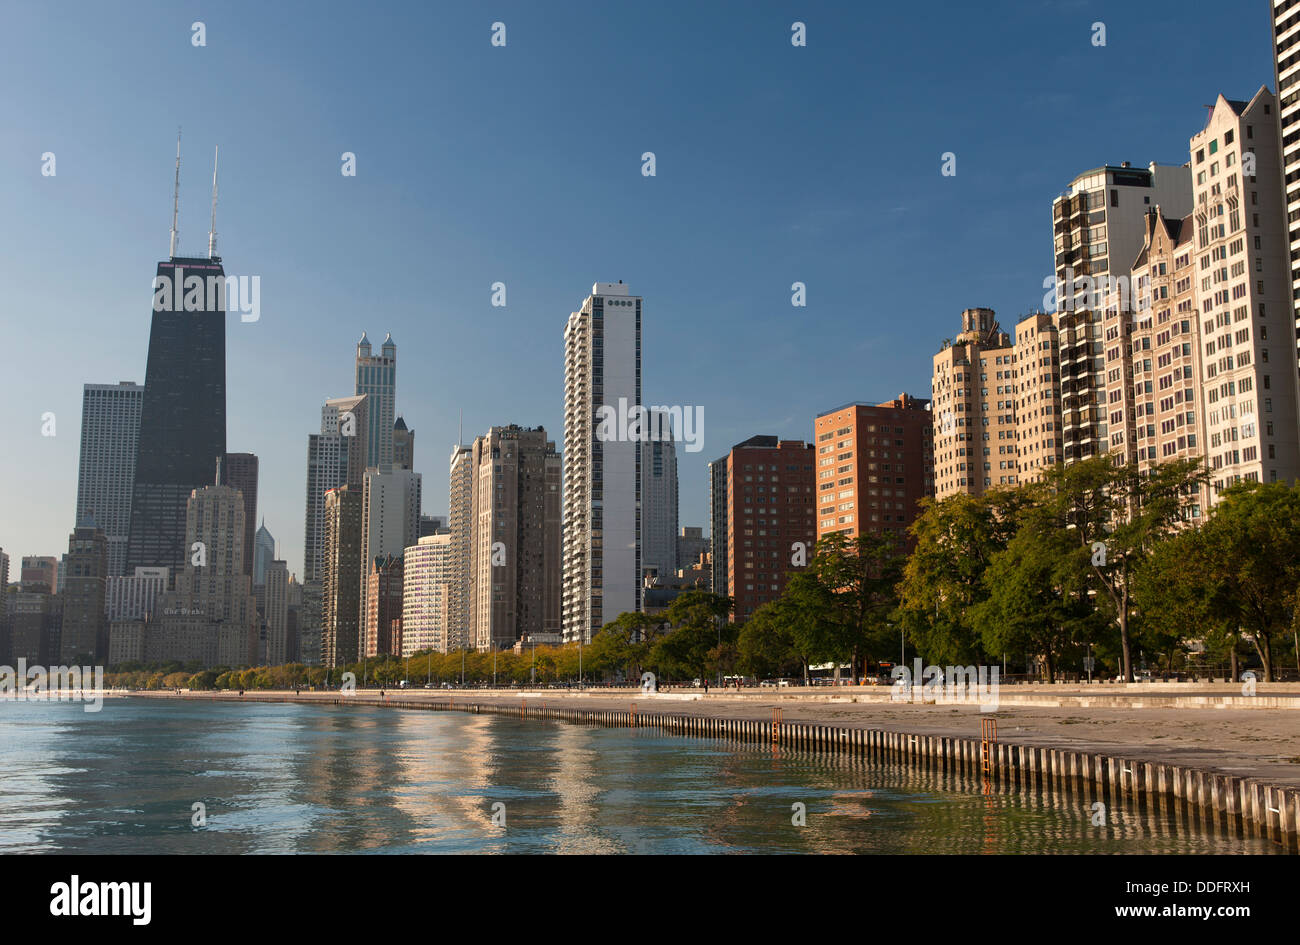 NORTH LAKE SHORE DRIVE SKYLINE CHICAGO ILLINOIS USA Stock Photo - Alamy